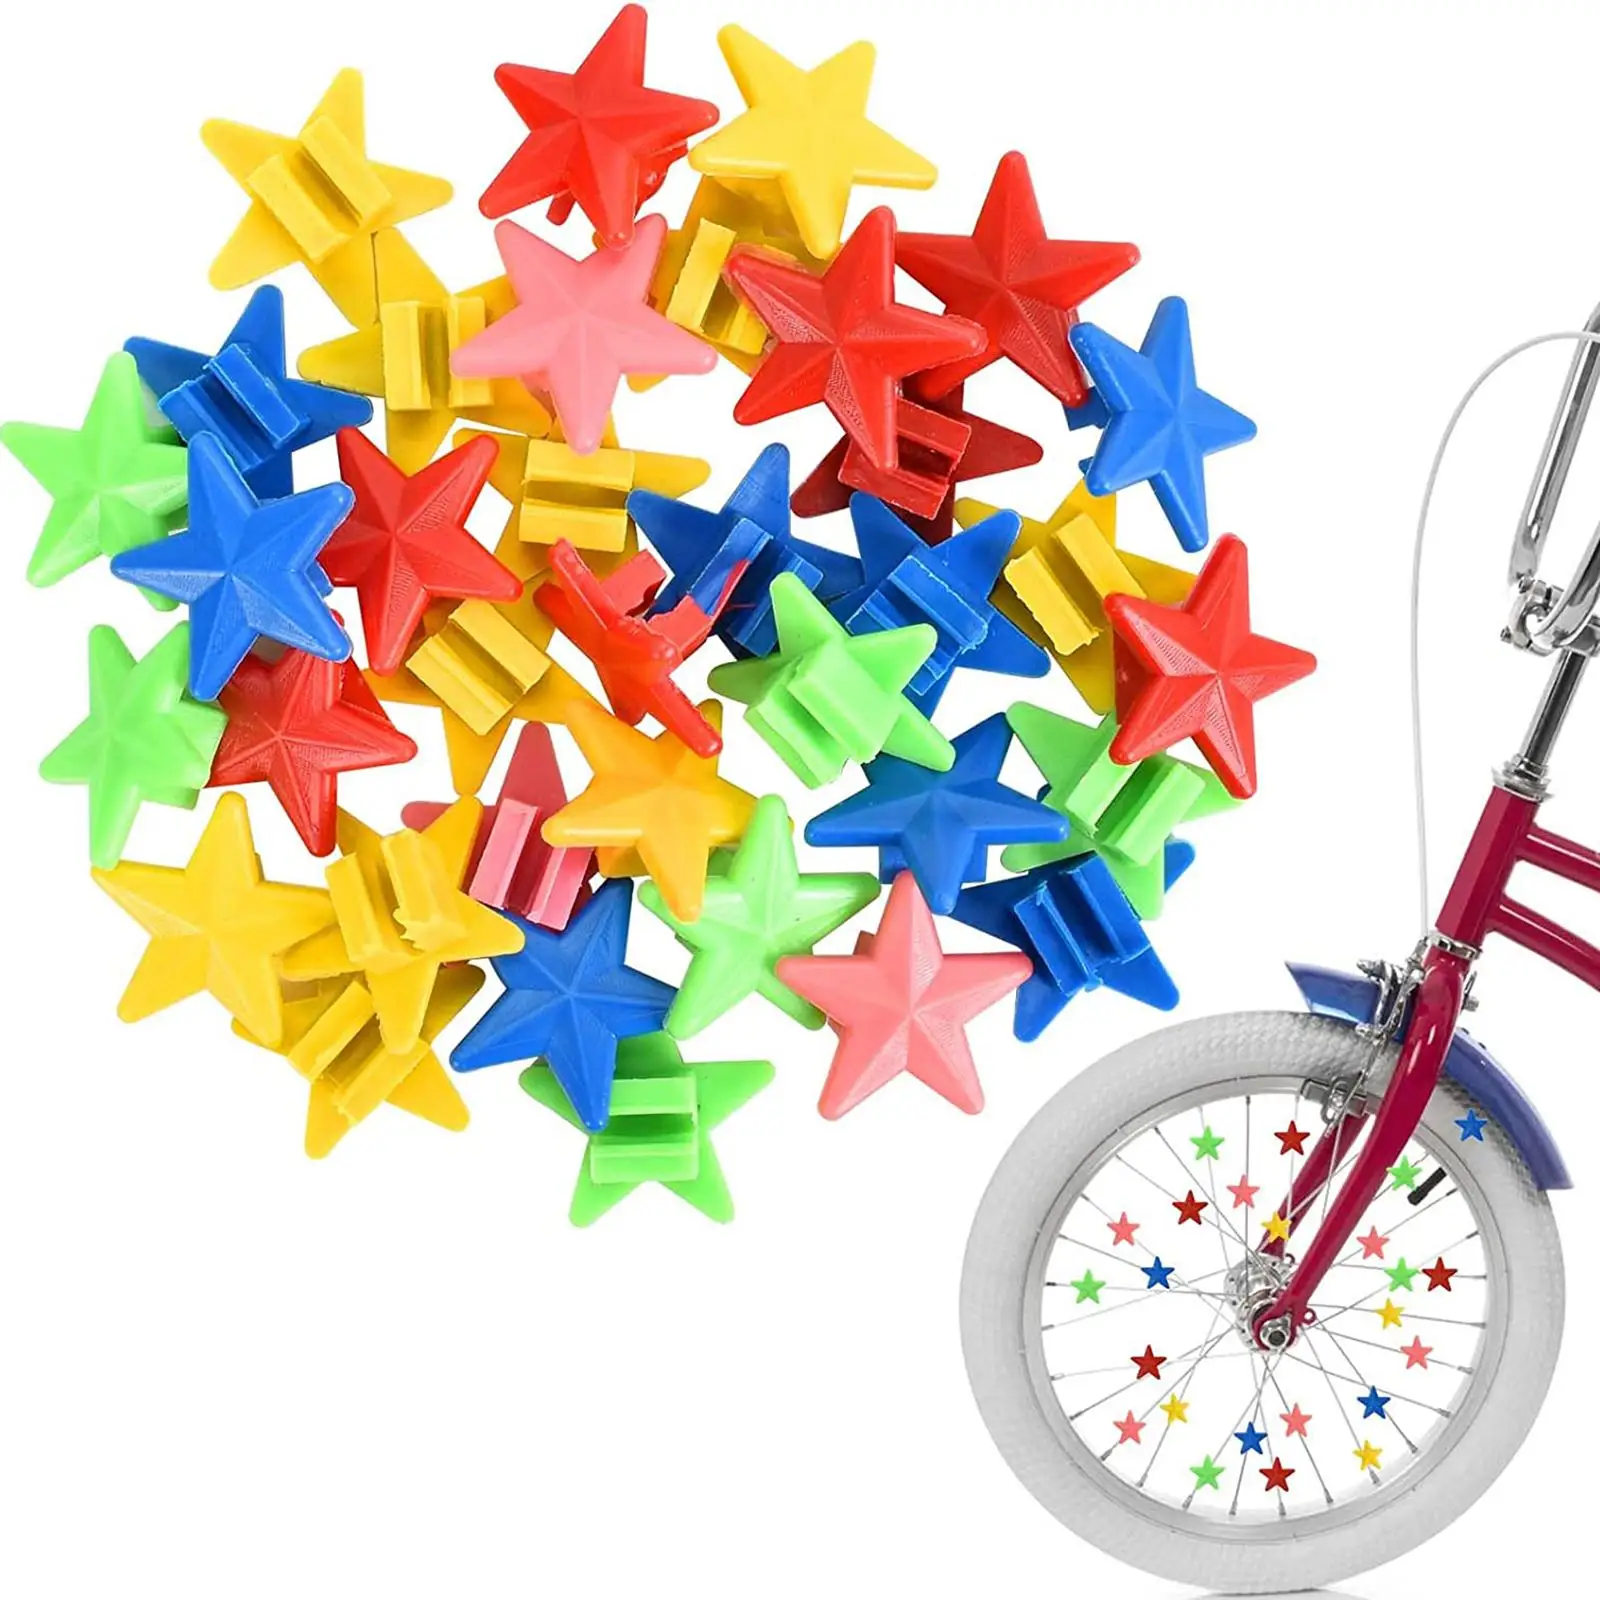 72 Pieces Bike Wheel Spokes Decoration Portable Colorful Universal Spoke Beads for Kids Boys Biking Accessories